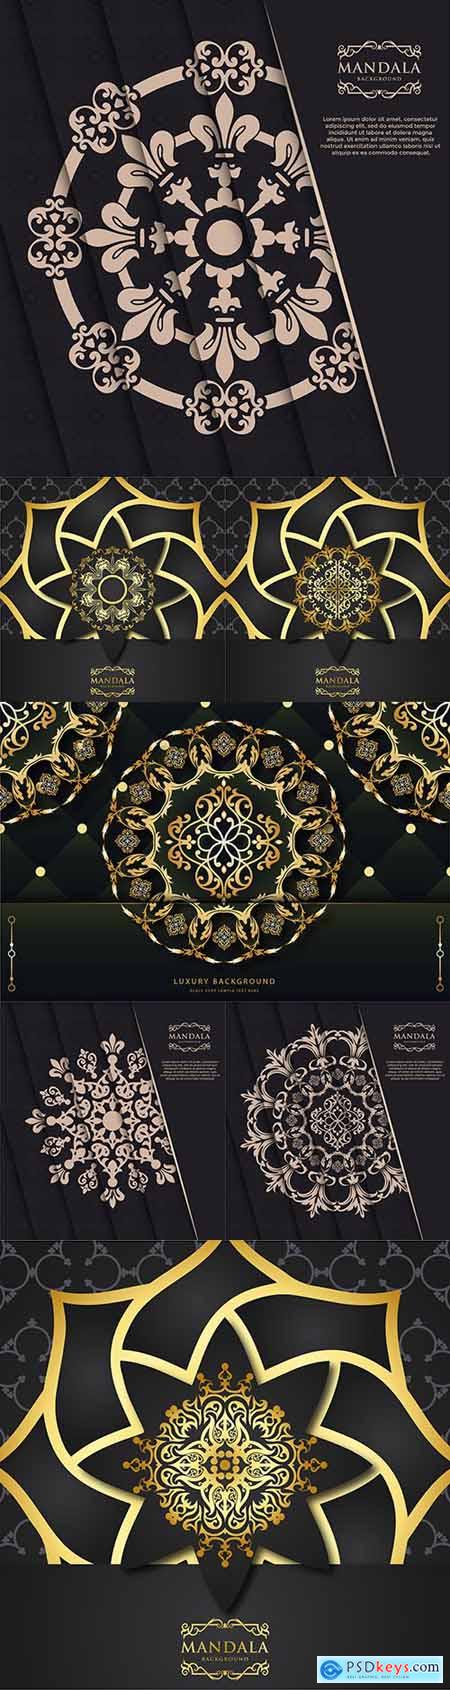 Luxury mandala decorative ornament design gold